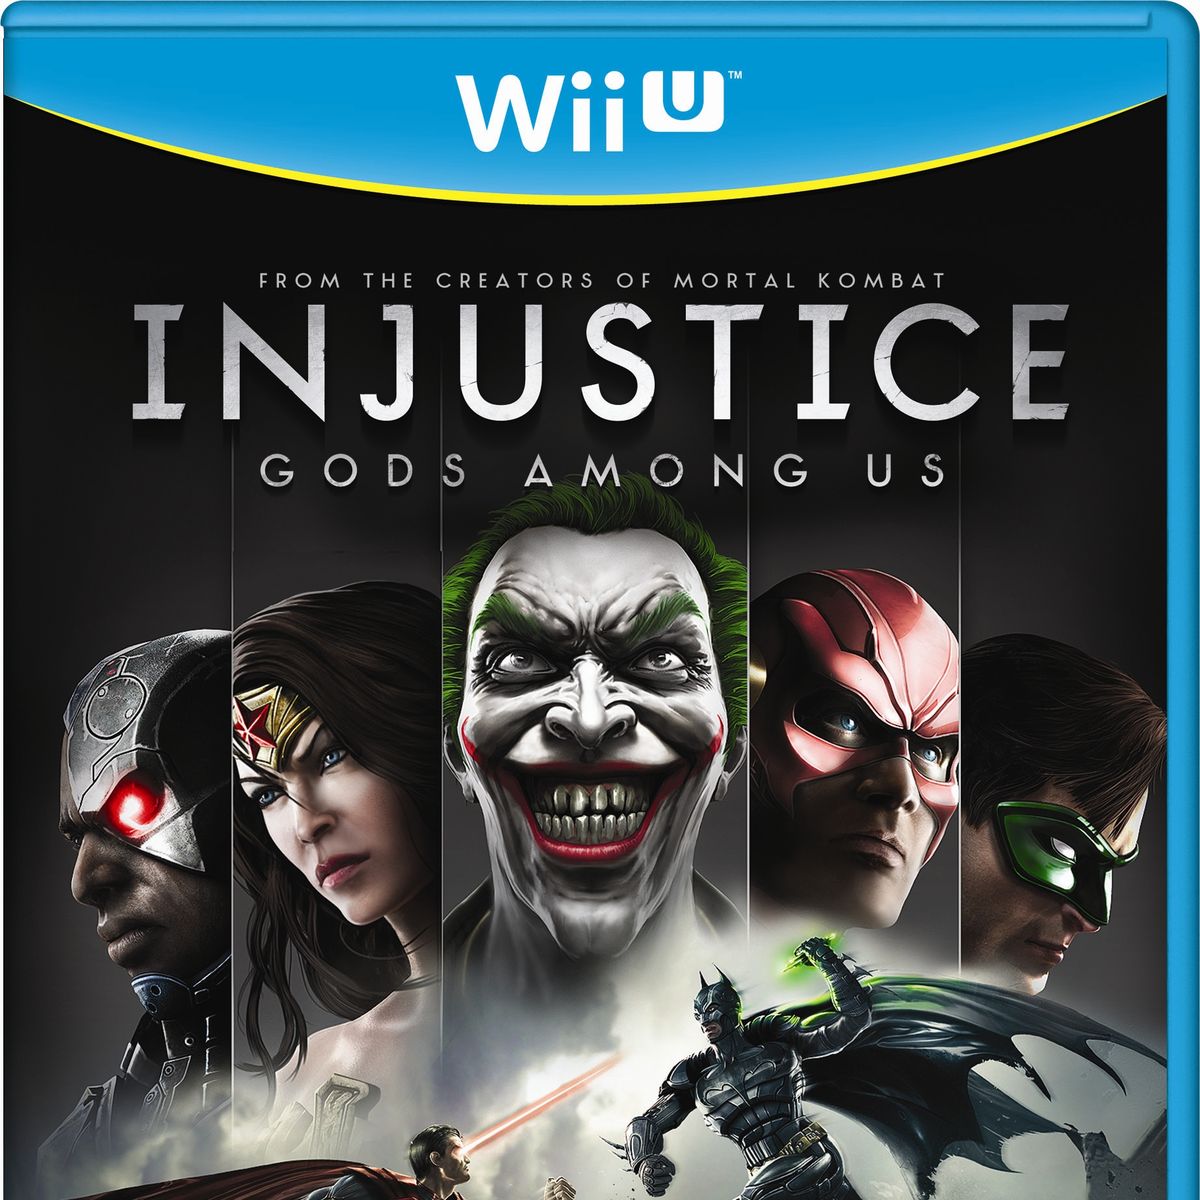 Injustice: Gods Among Us Season Pass XBOX 360 [Digital Code] 